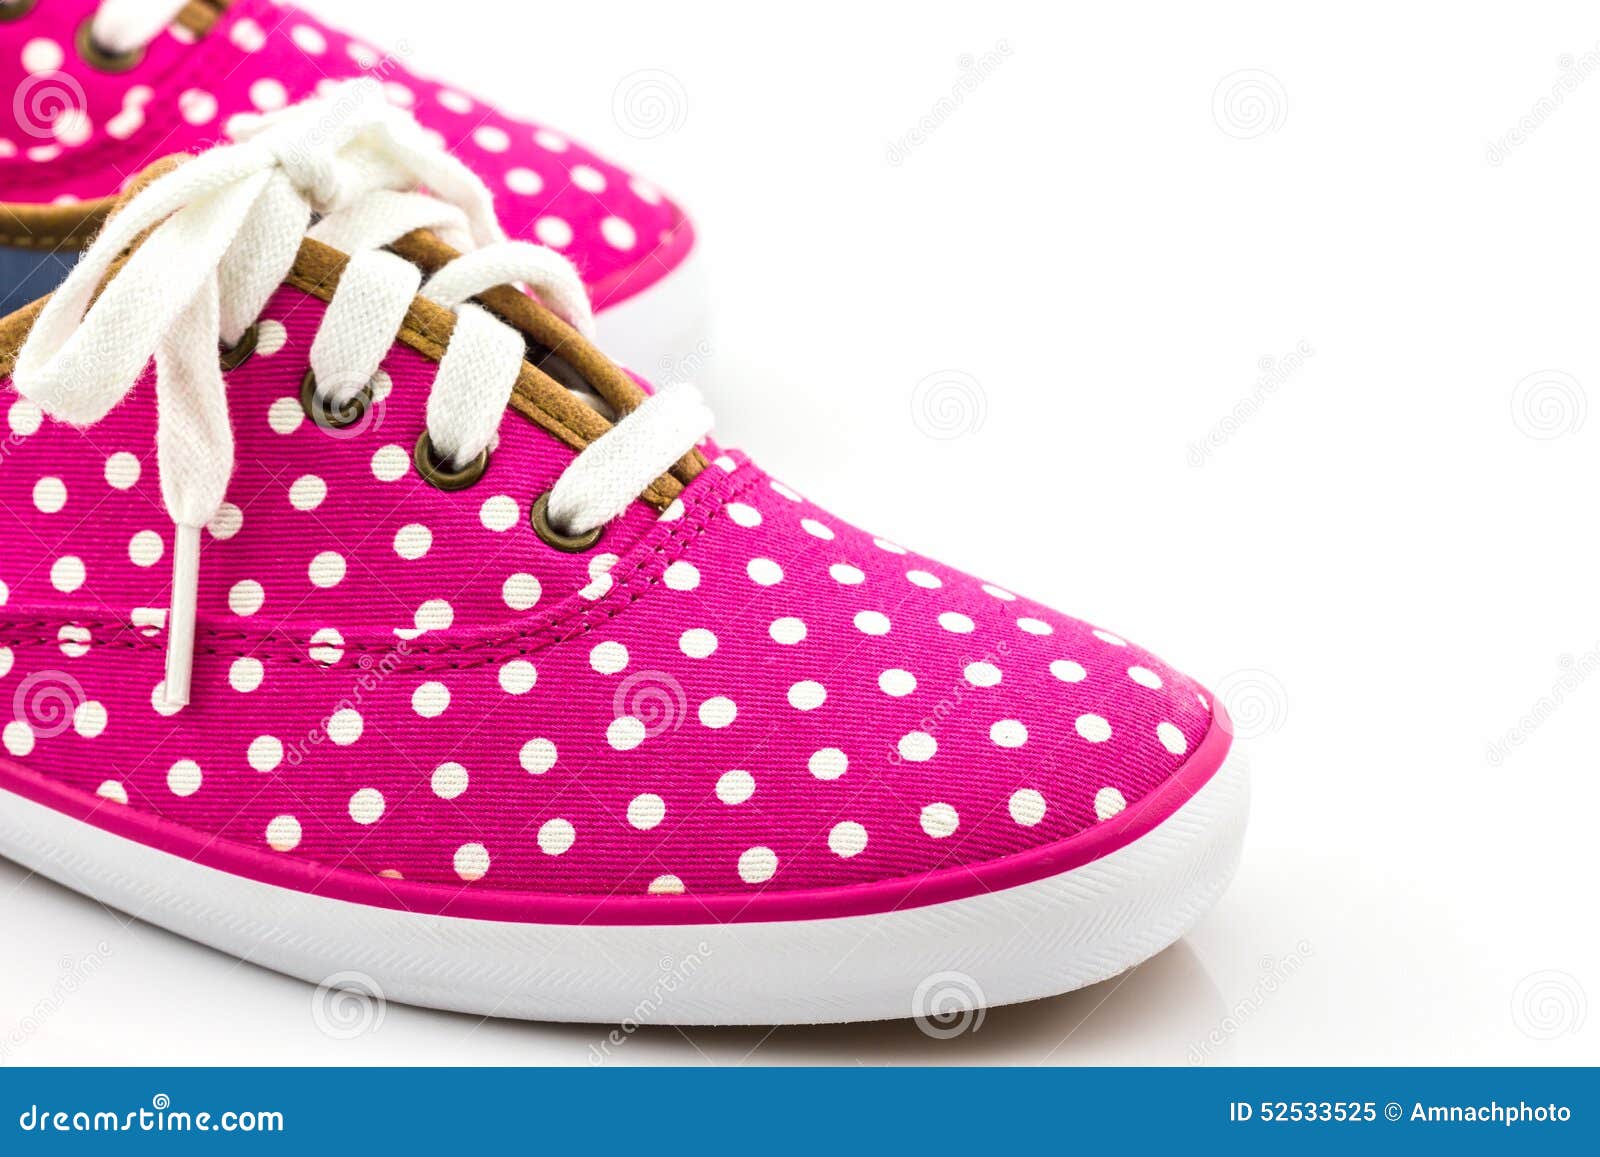 Pink Polka Dot Canvas Shoe. Stock Image - Image of string, footwear ...